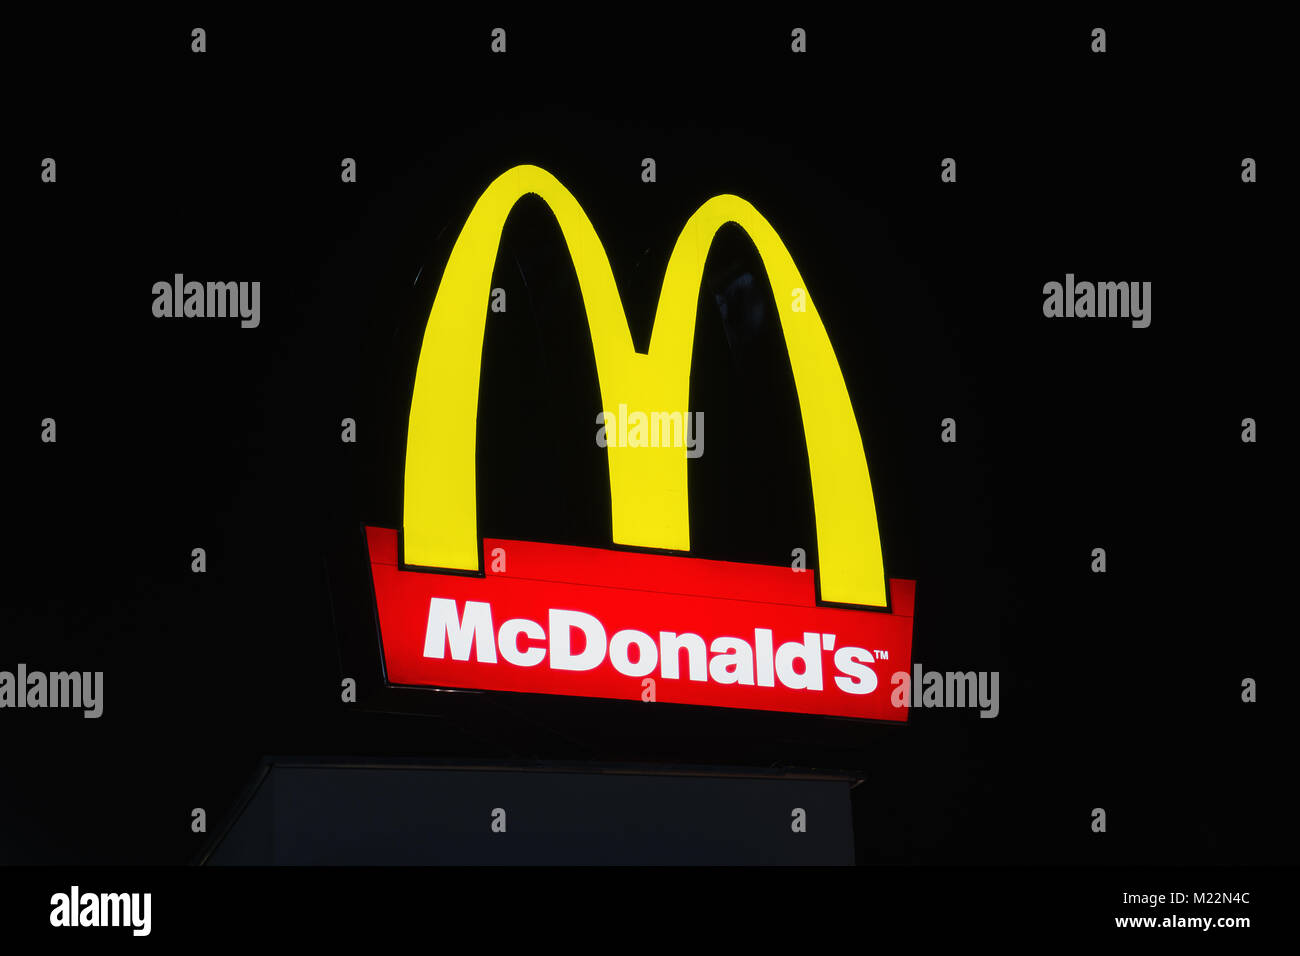 BURGAS, BULGARIA - FEBRUARY 1, 2018: McDonald's logo at night. McDonald's is the world's largest chain of hamburger fast food restaurants. Stock Photo